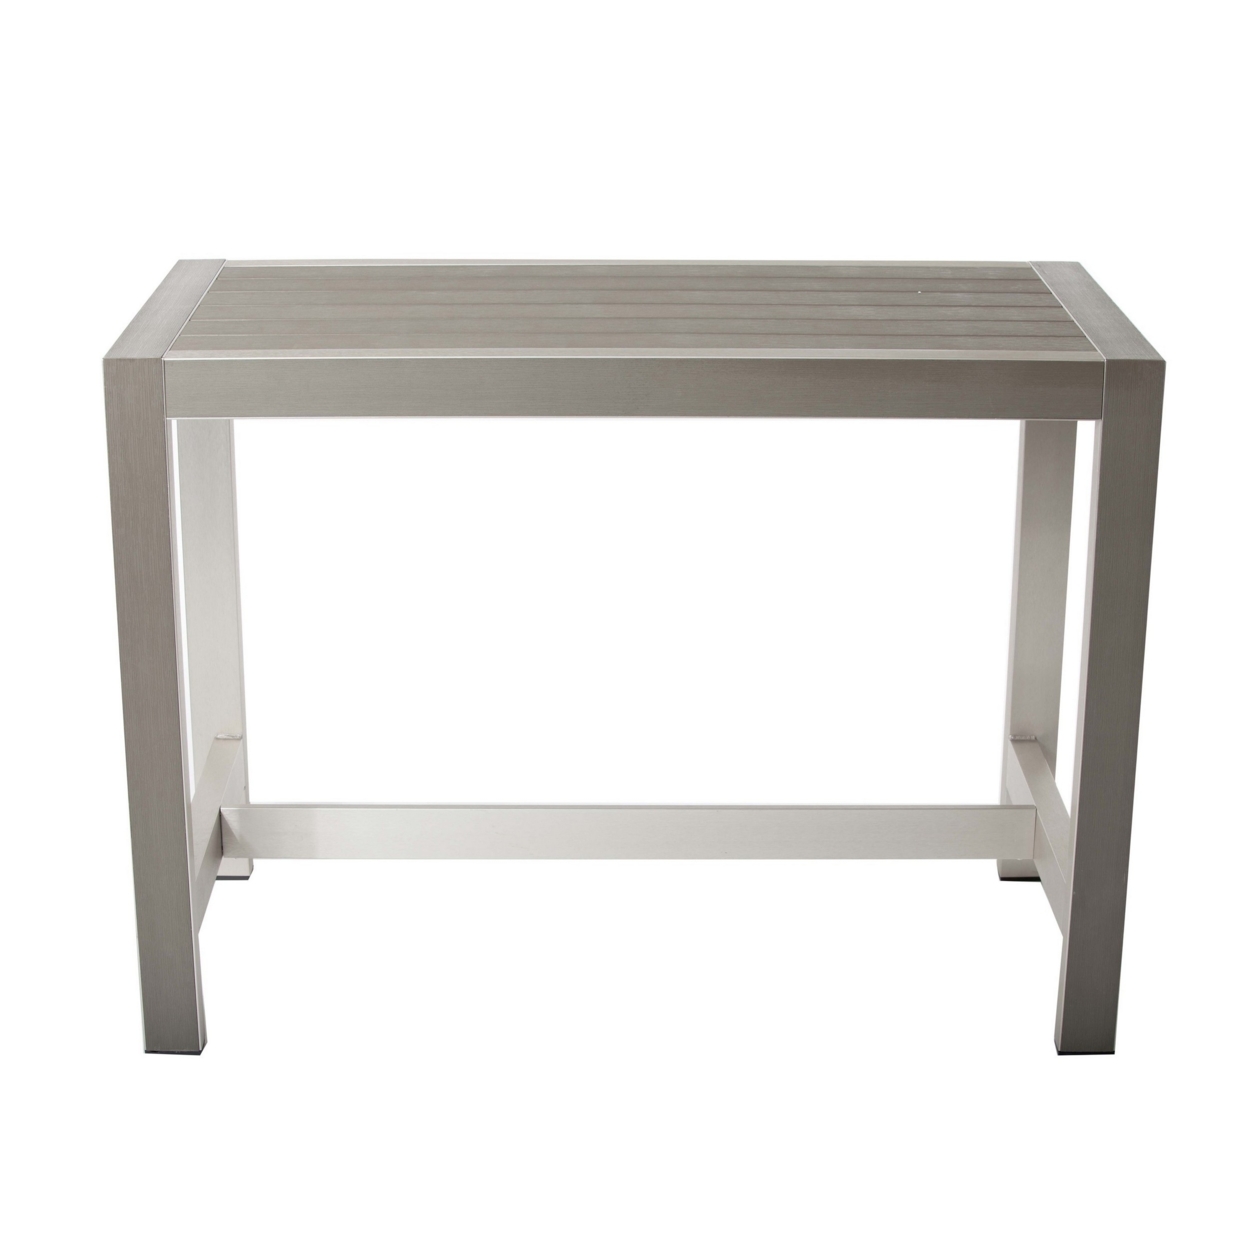 Kylo 59 Inch Outdoor Bar Table, Gray Aluminum Frame, Plank Surface, Large- Saltoro Sherpi